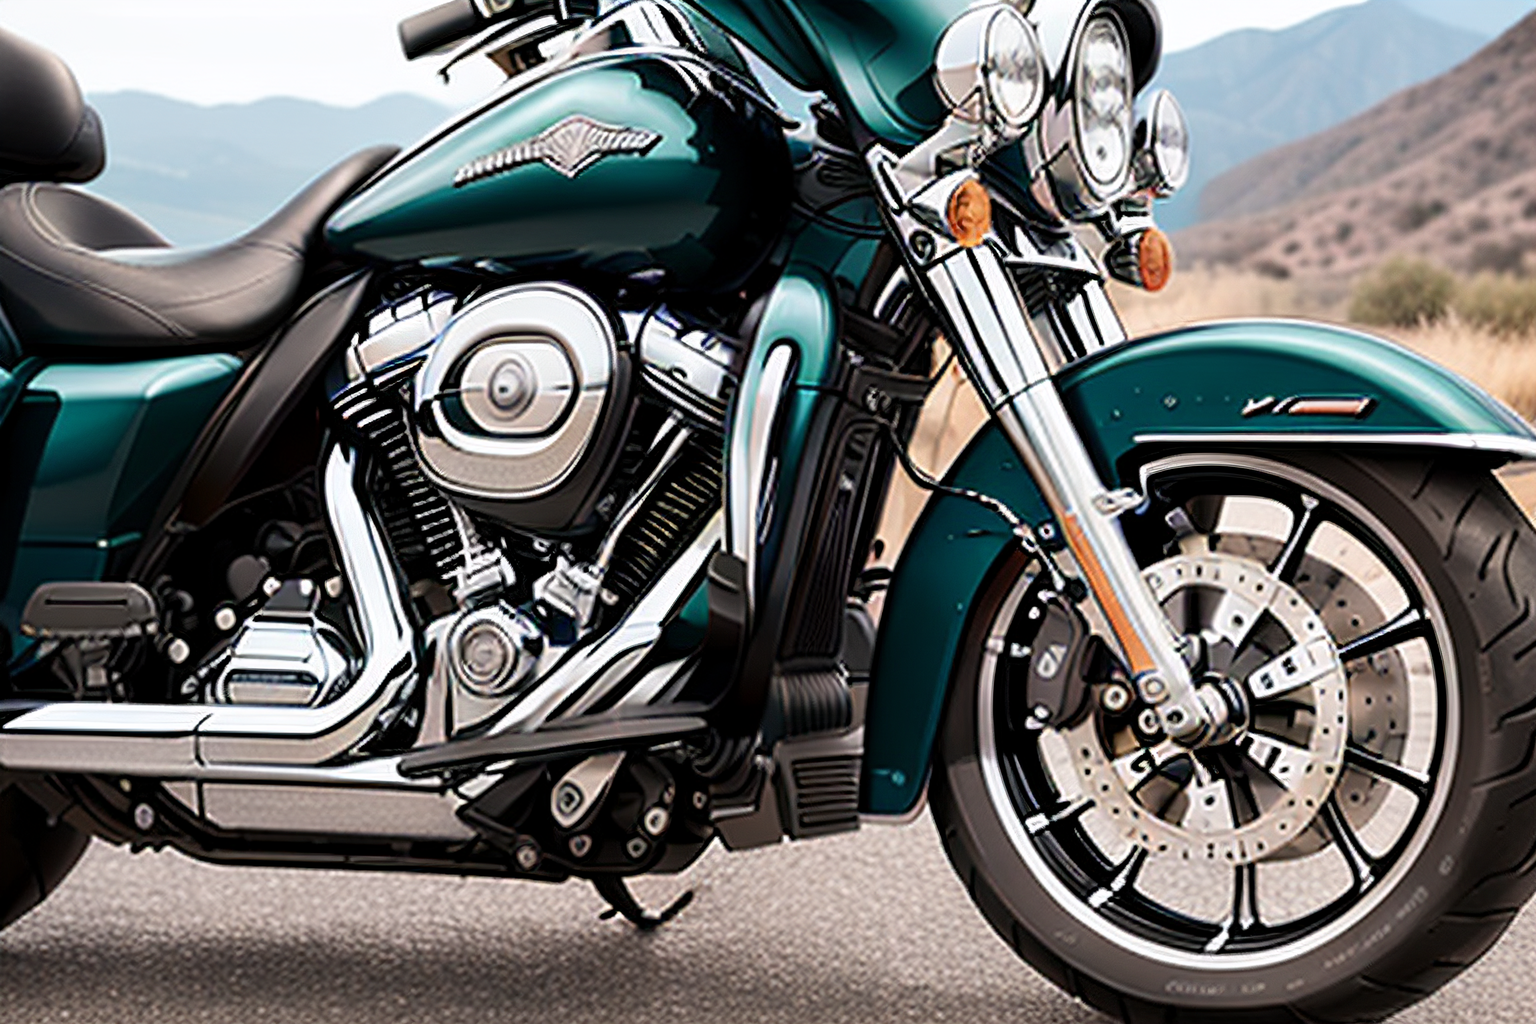 2015 Harley Davidson Ultra Limited Problems: Guide